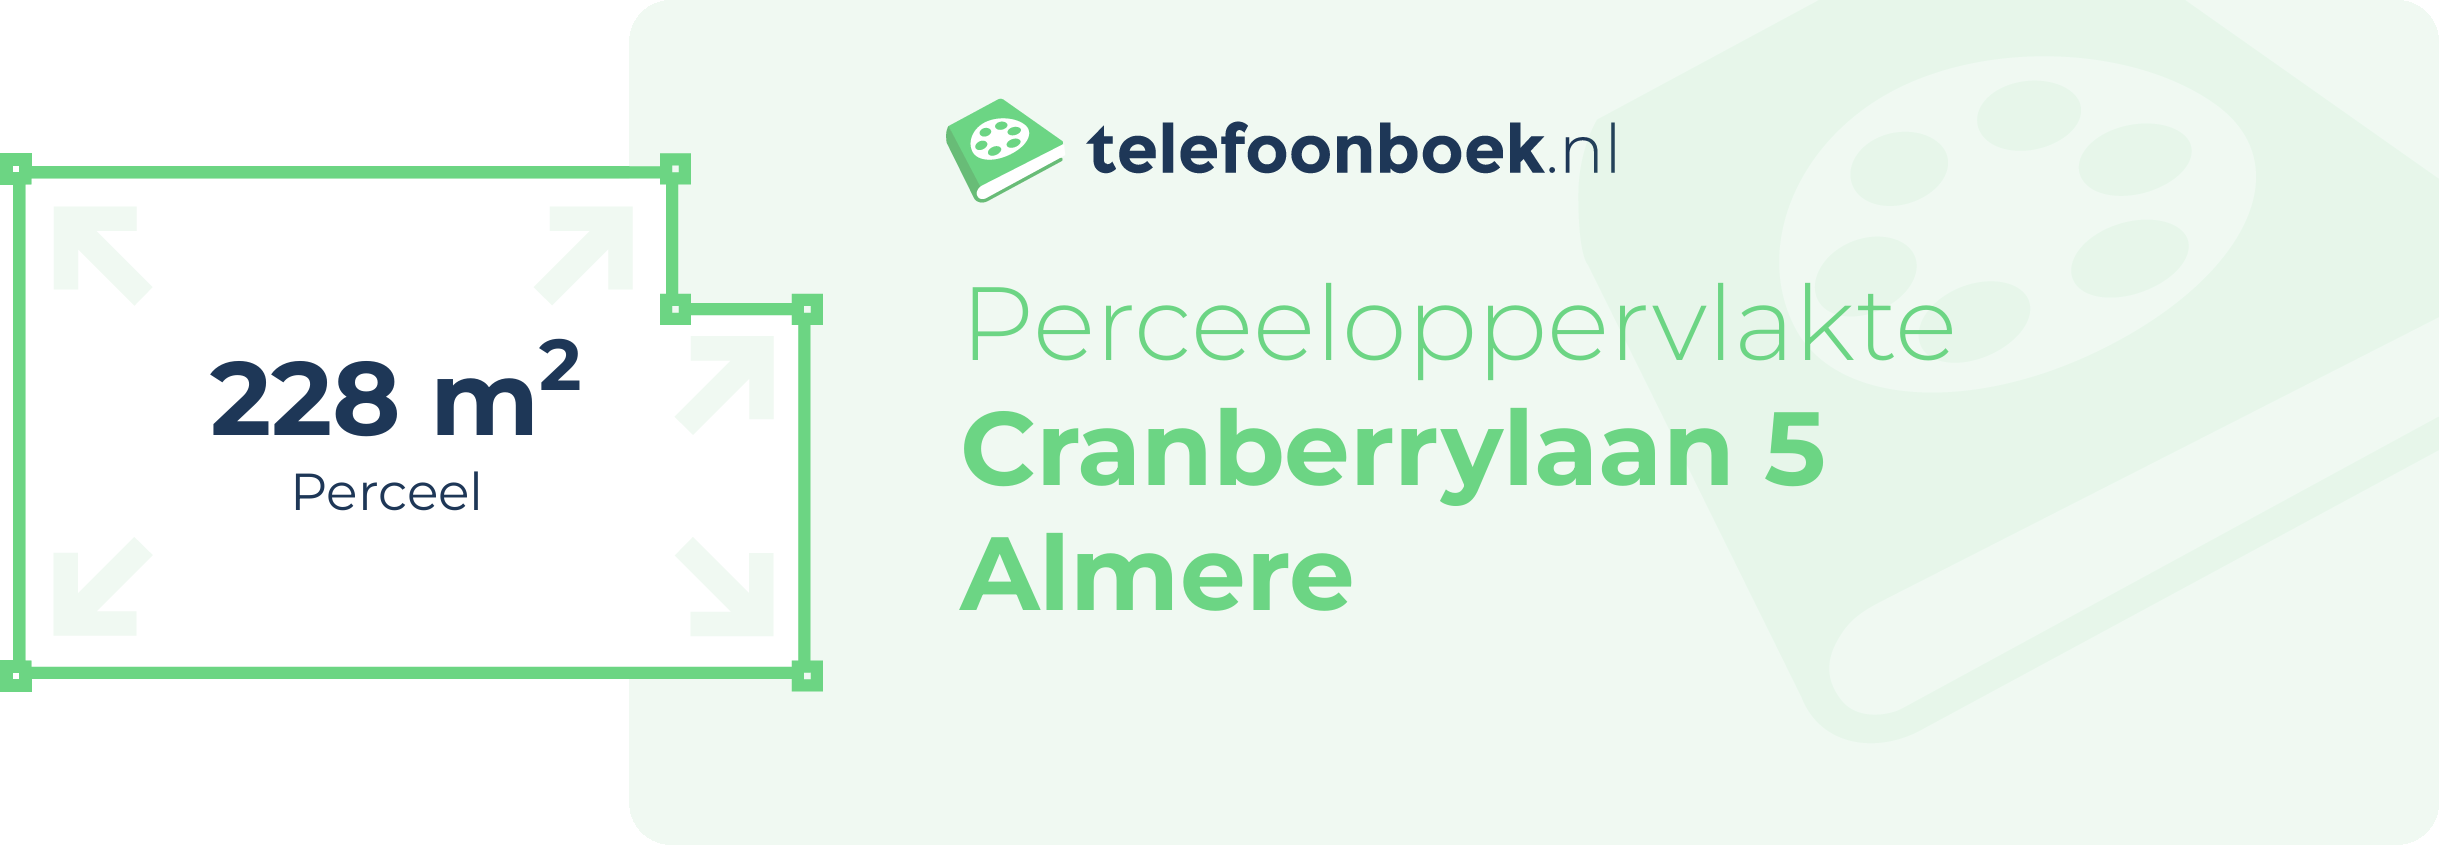 Perceeloppervlakte Cranberrylaan 5 Almere